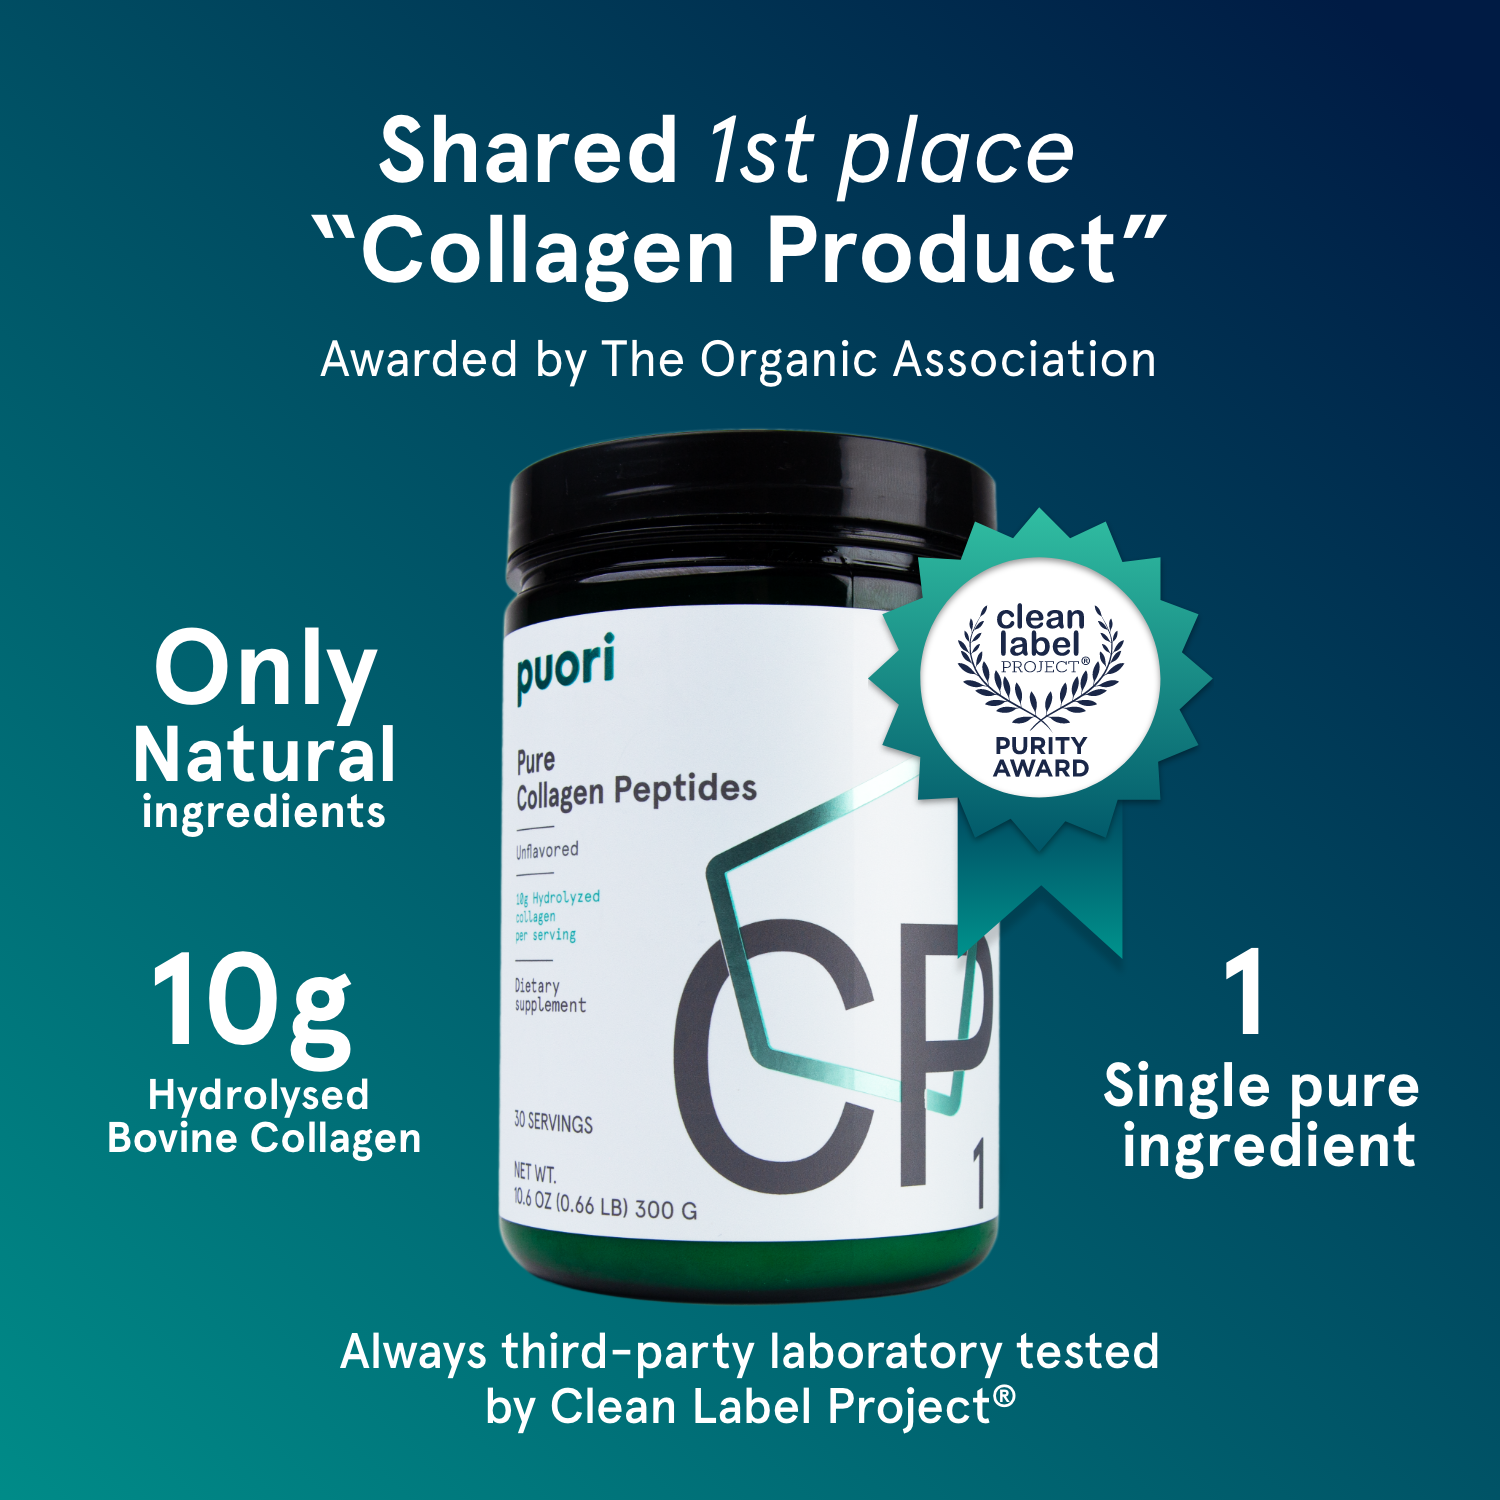 CP1 - Pure Collagen Peptides